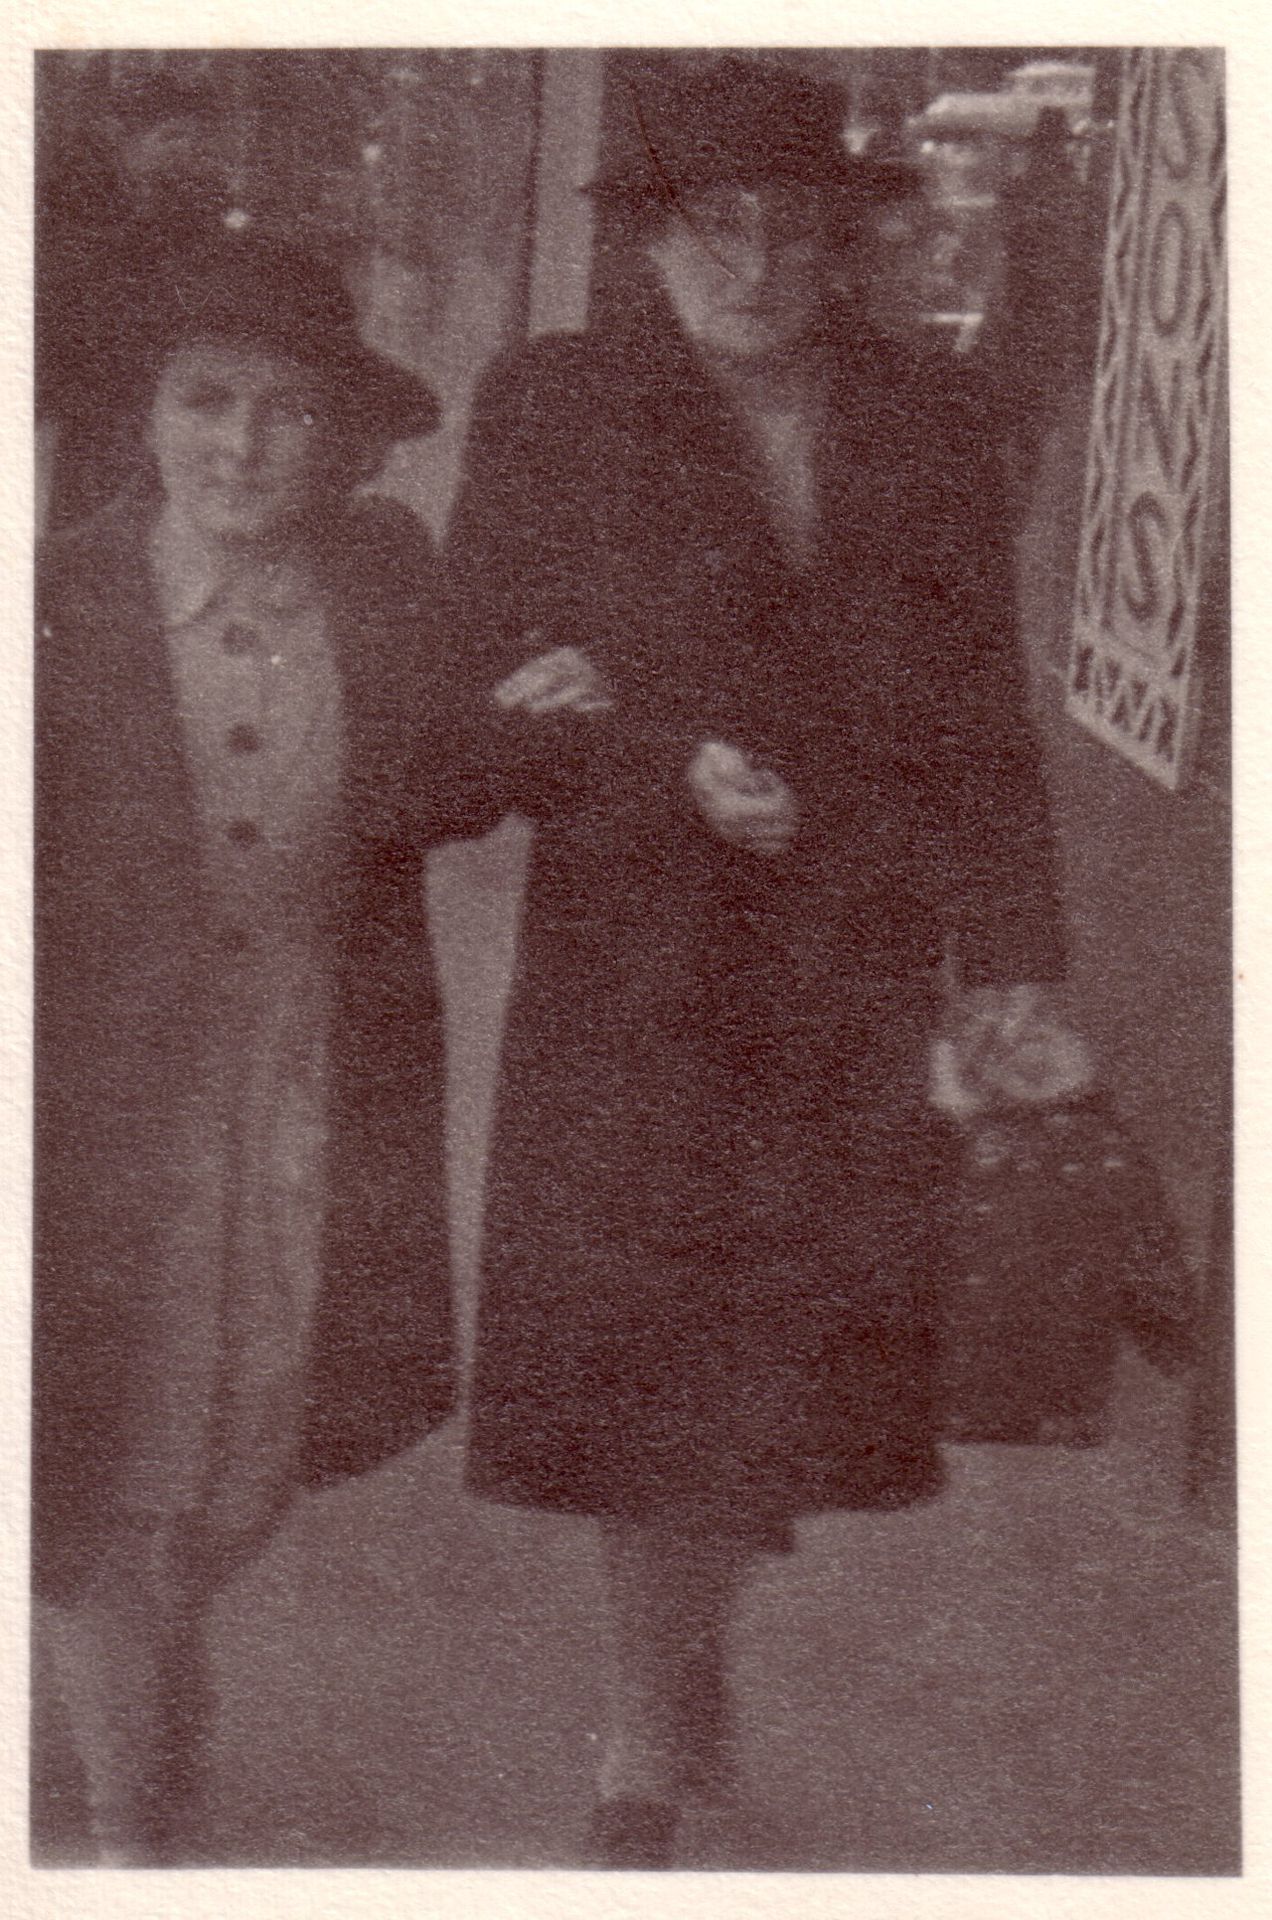 Jill and Florence Ellis, 1949 (Collins St Melbourne street photographer)